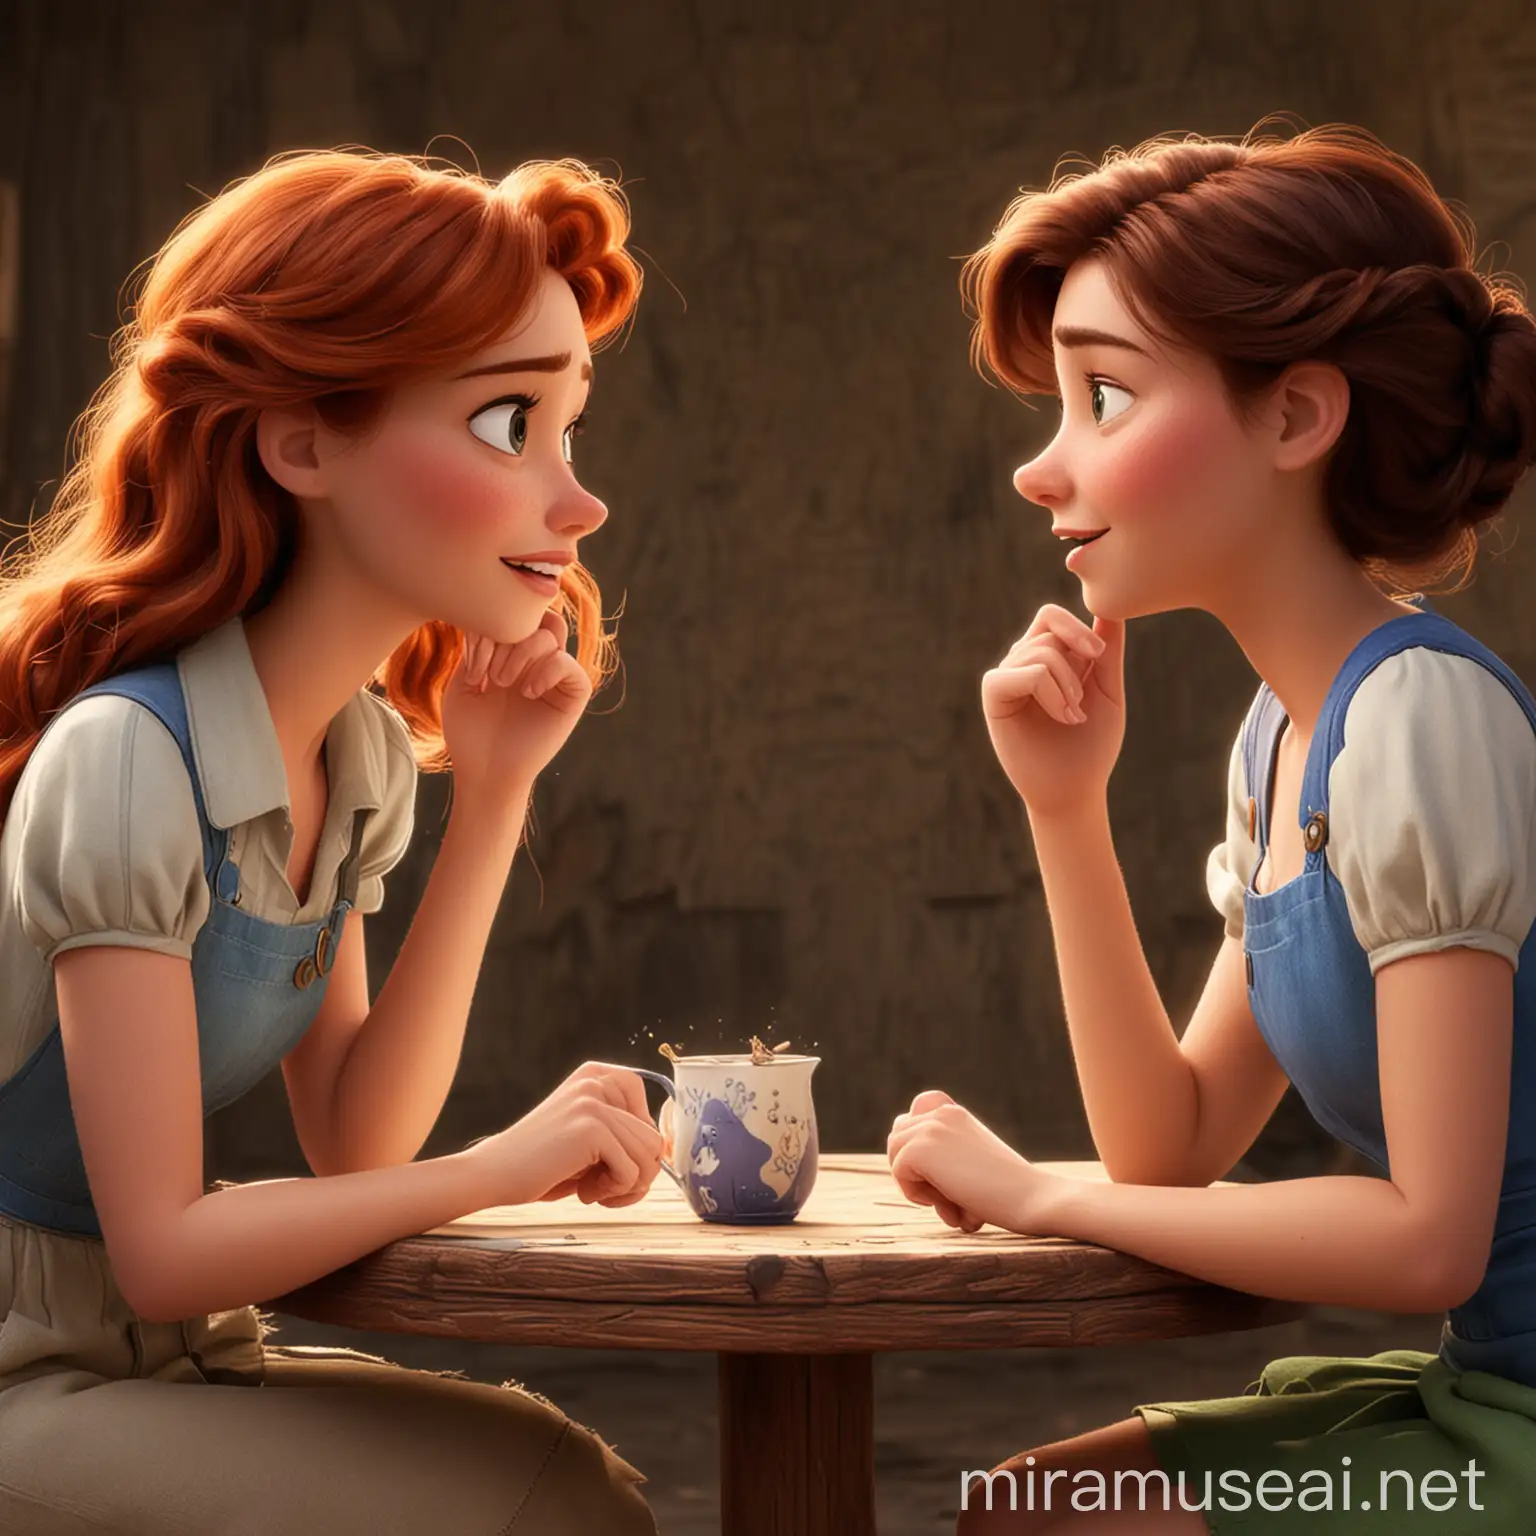 Animated Conversation Between Two Women in Disney Pixar Style